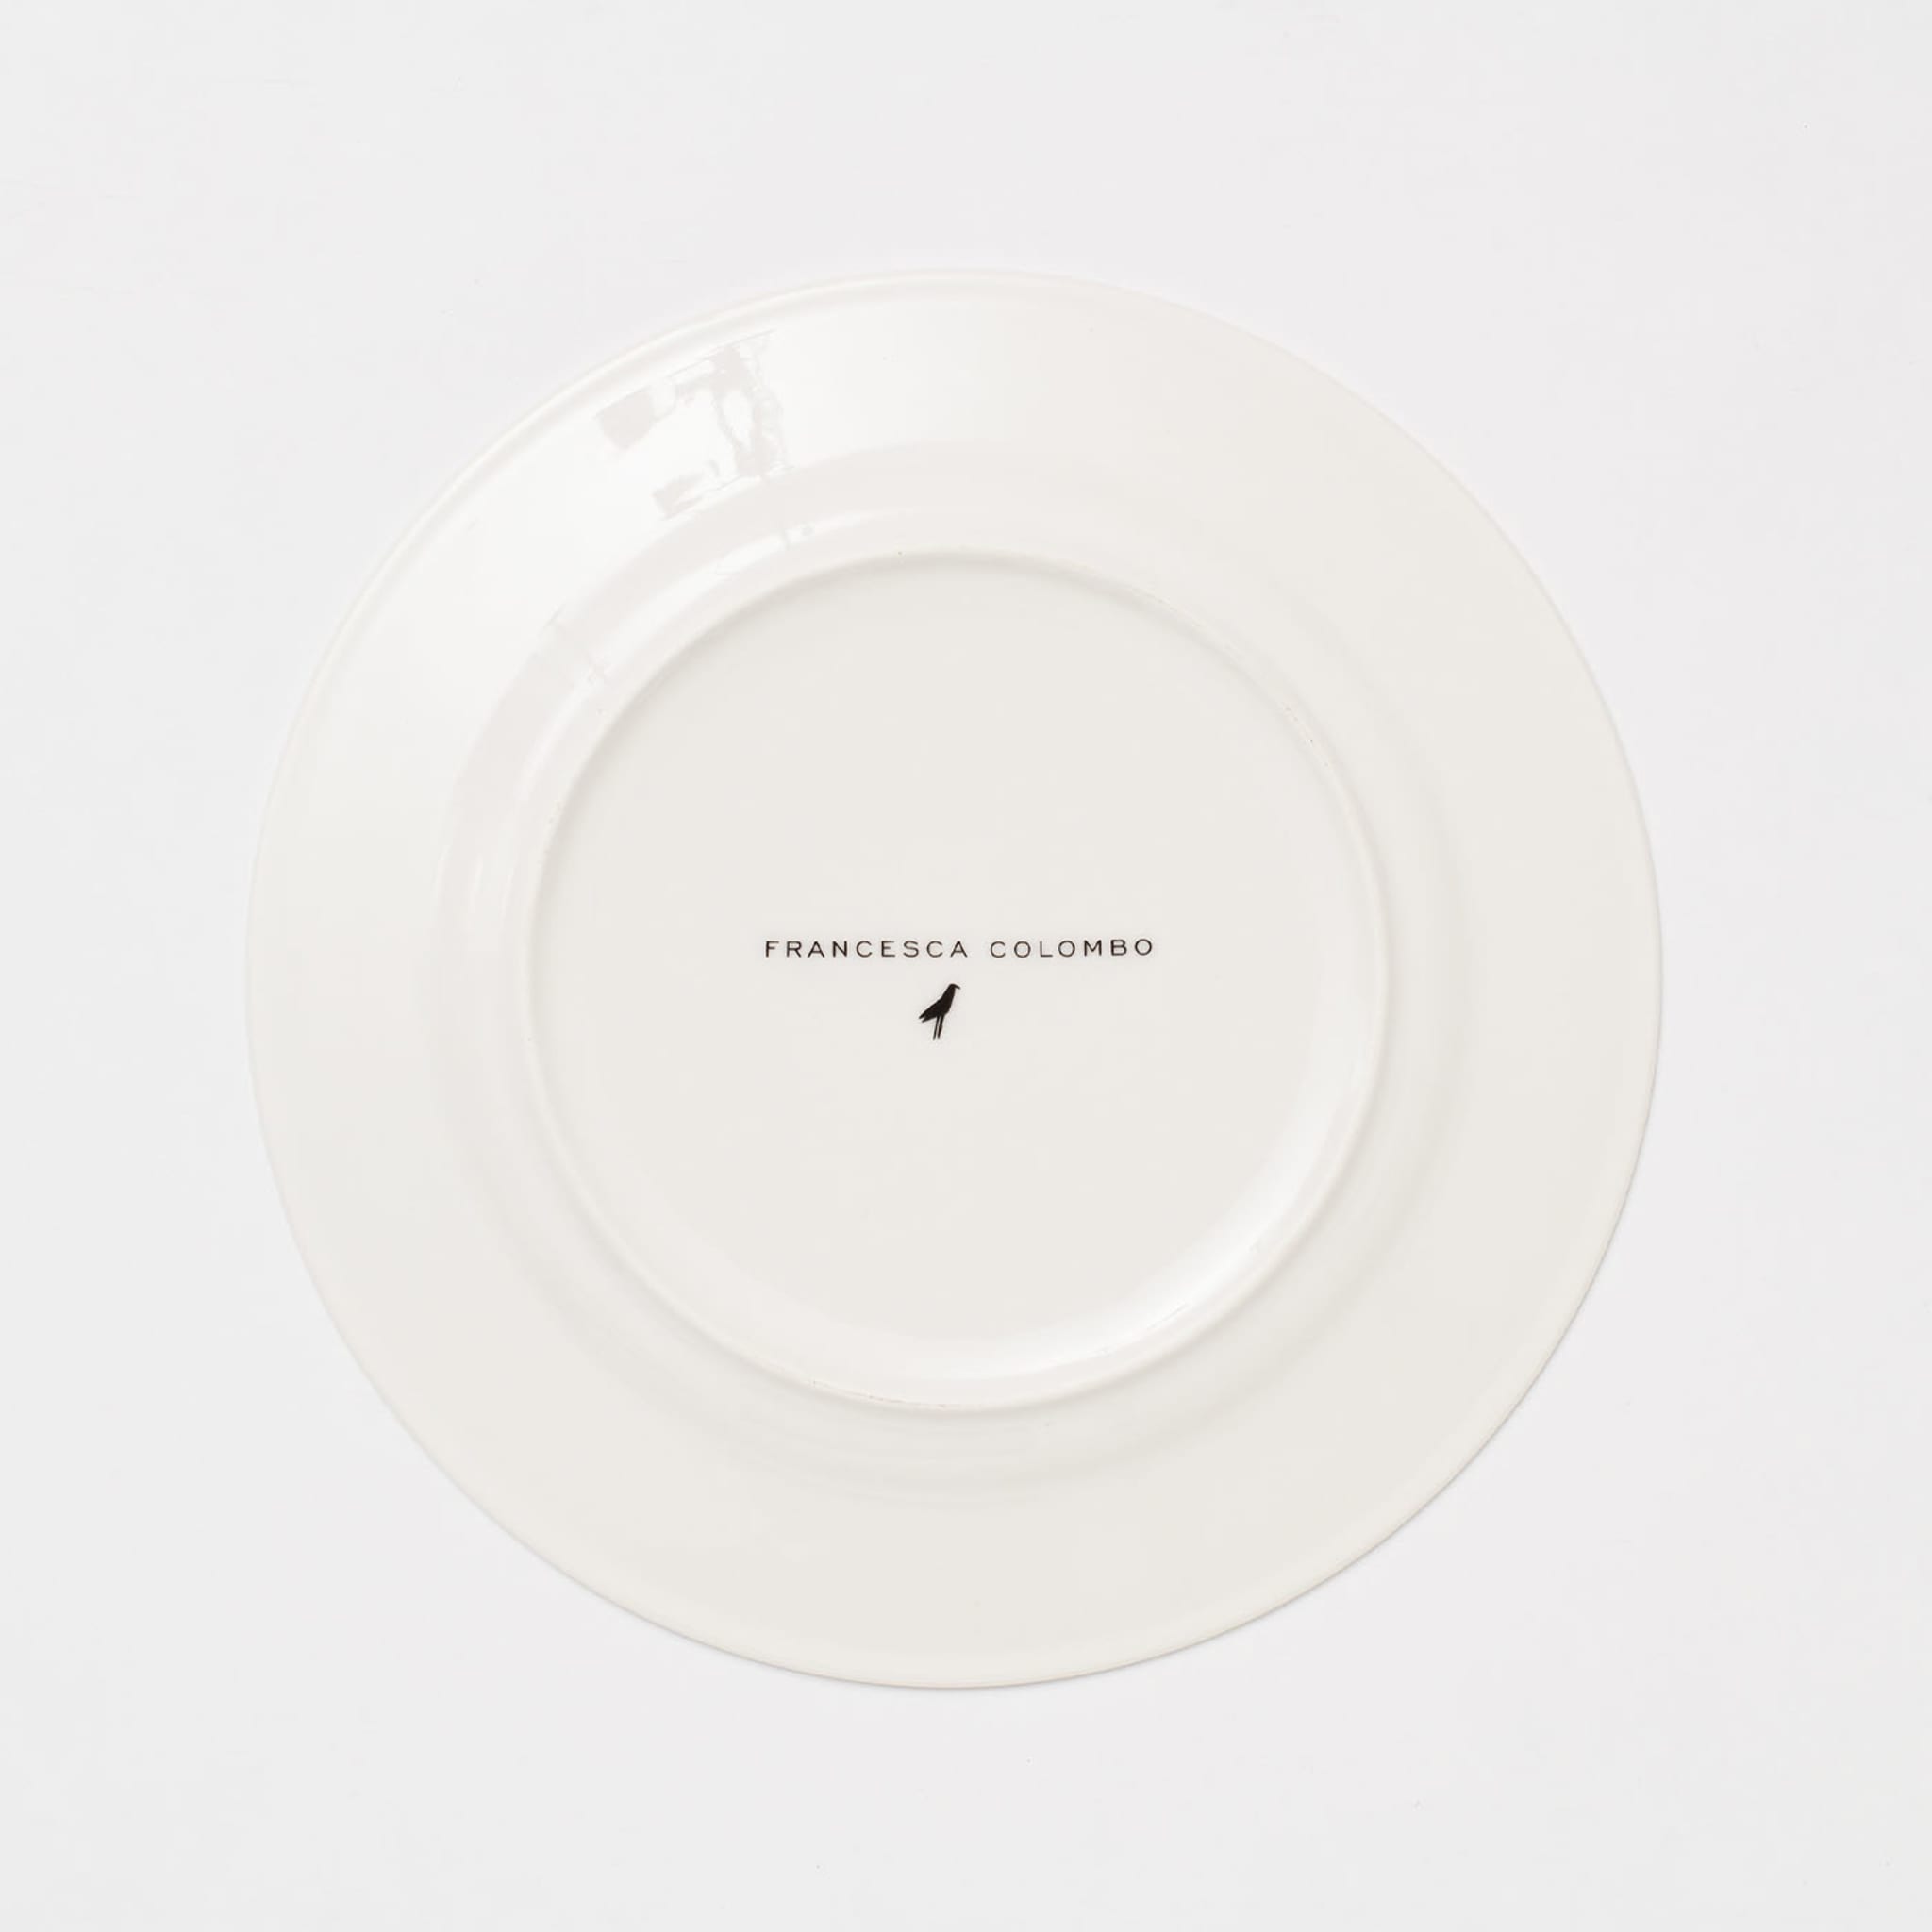 Bird Song Polychrome Dinner Plate #1 - Alternative view 4